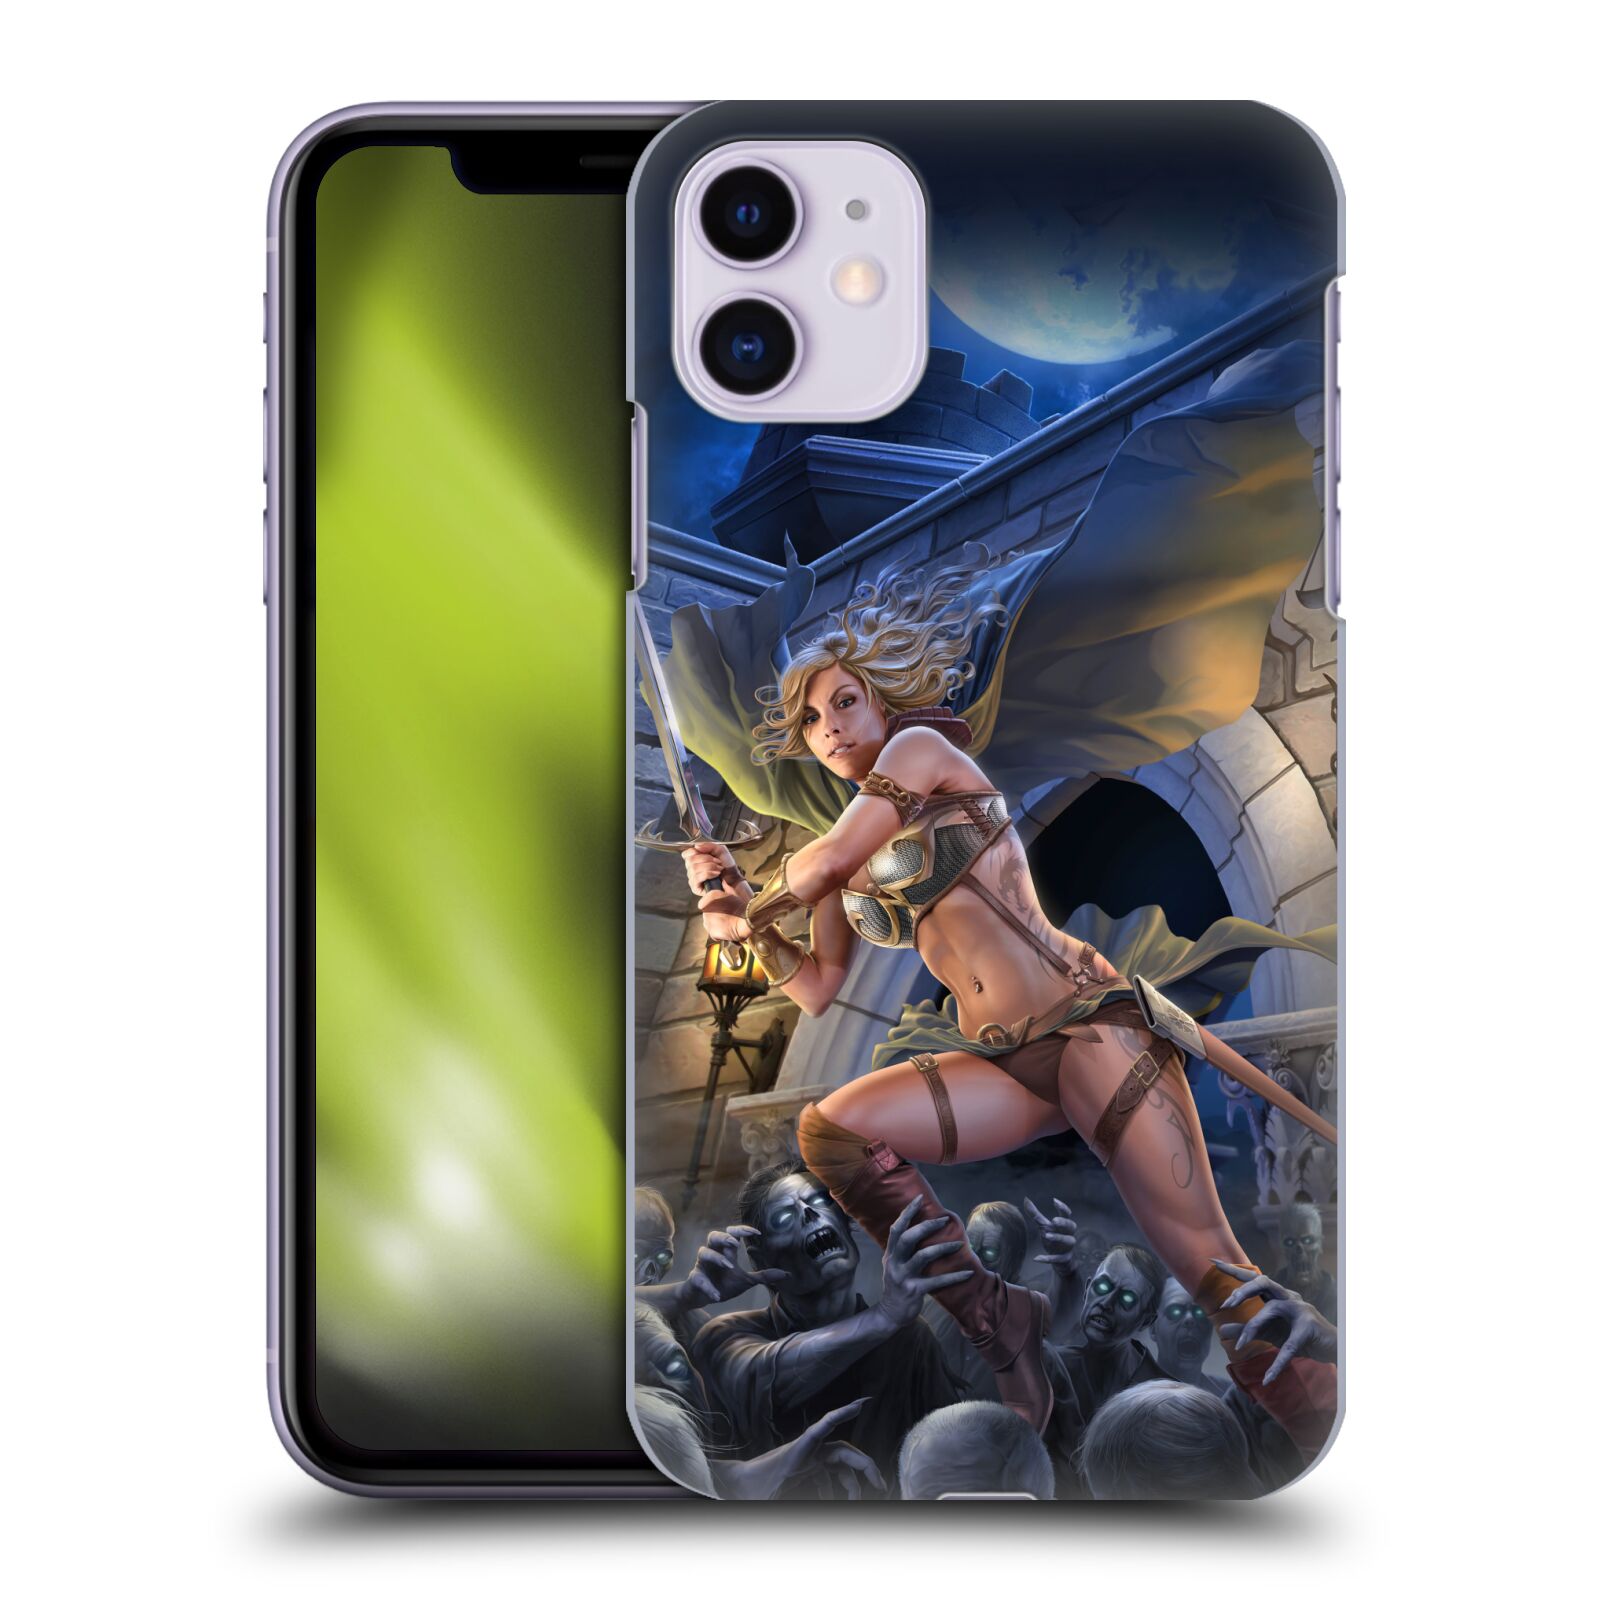 Pouzdro na mobil Apple Iphone 11 - HEAD CASE - Fantasy kresby Tom Wood - Princezna bojovnice a zombies